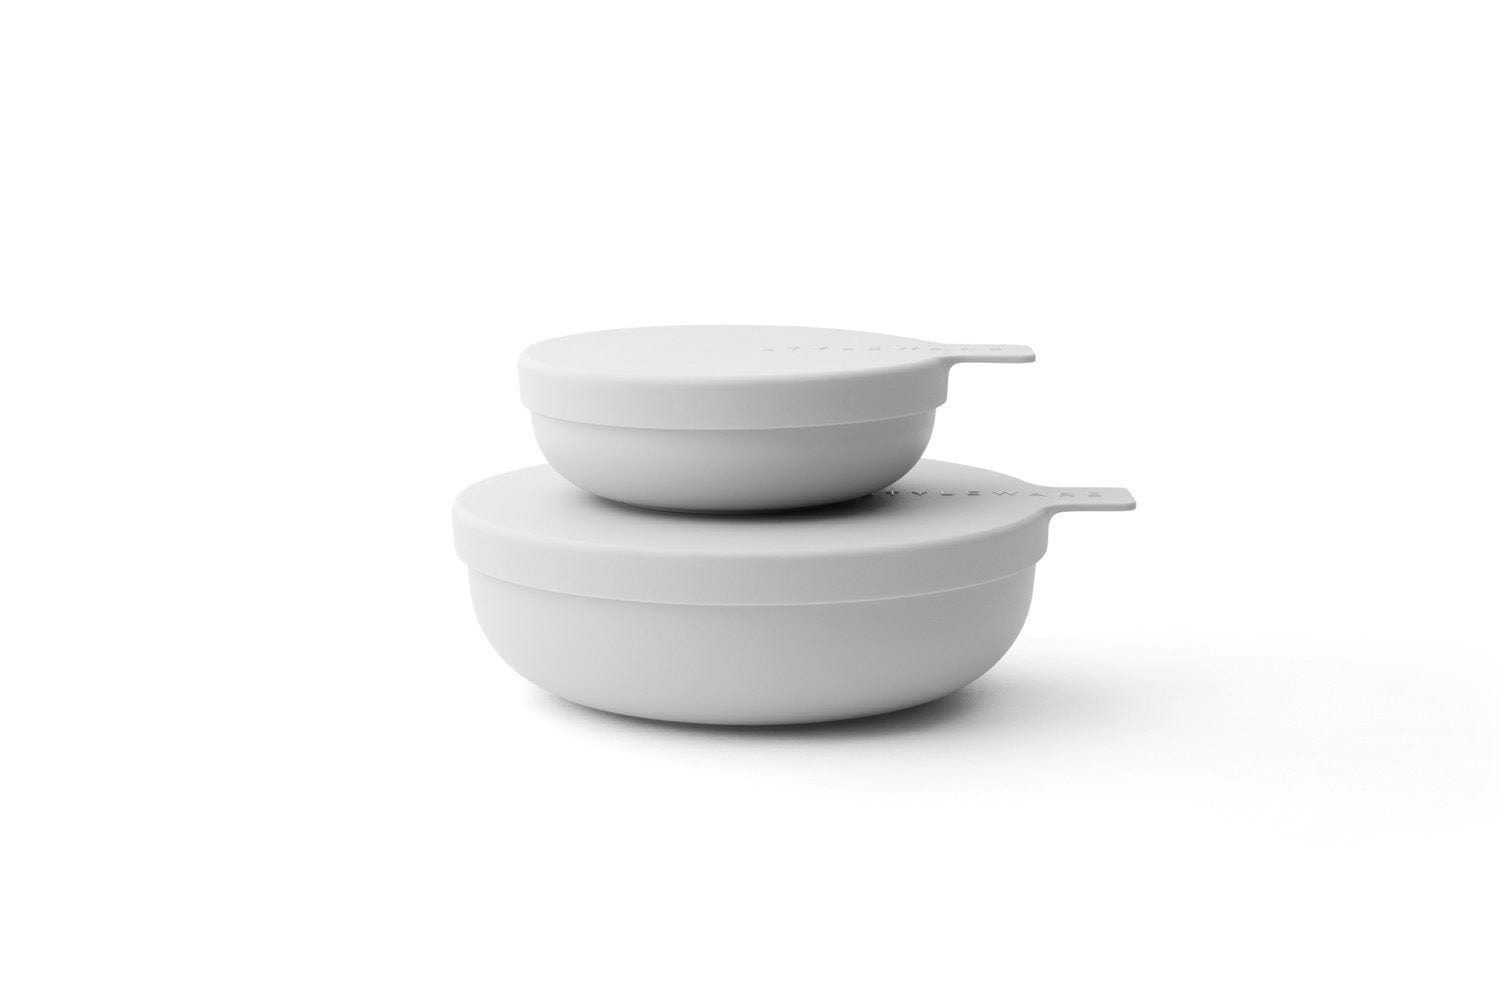 Styleware Nesting Bowl - Smoke - Norsu Interiors (7527654392057)